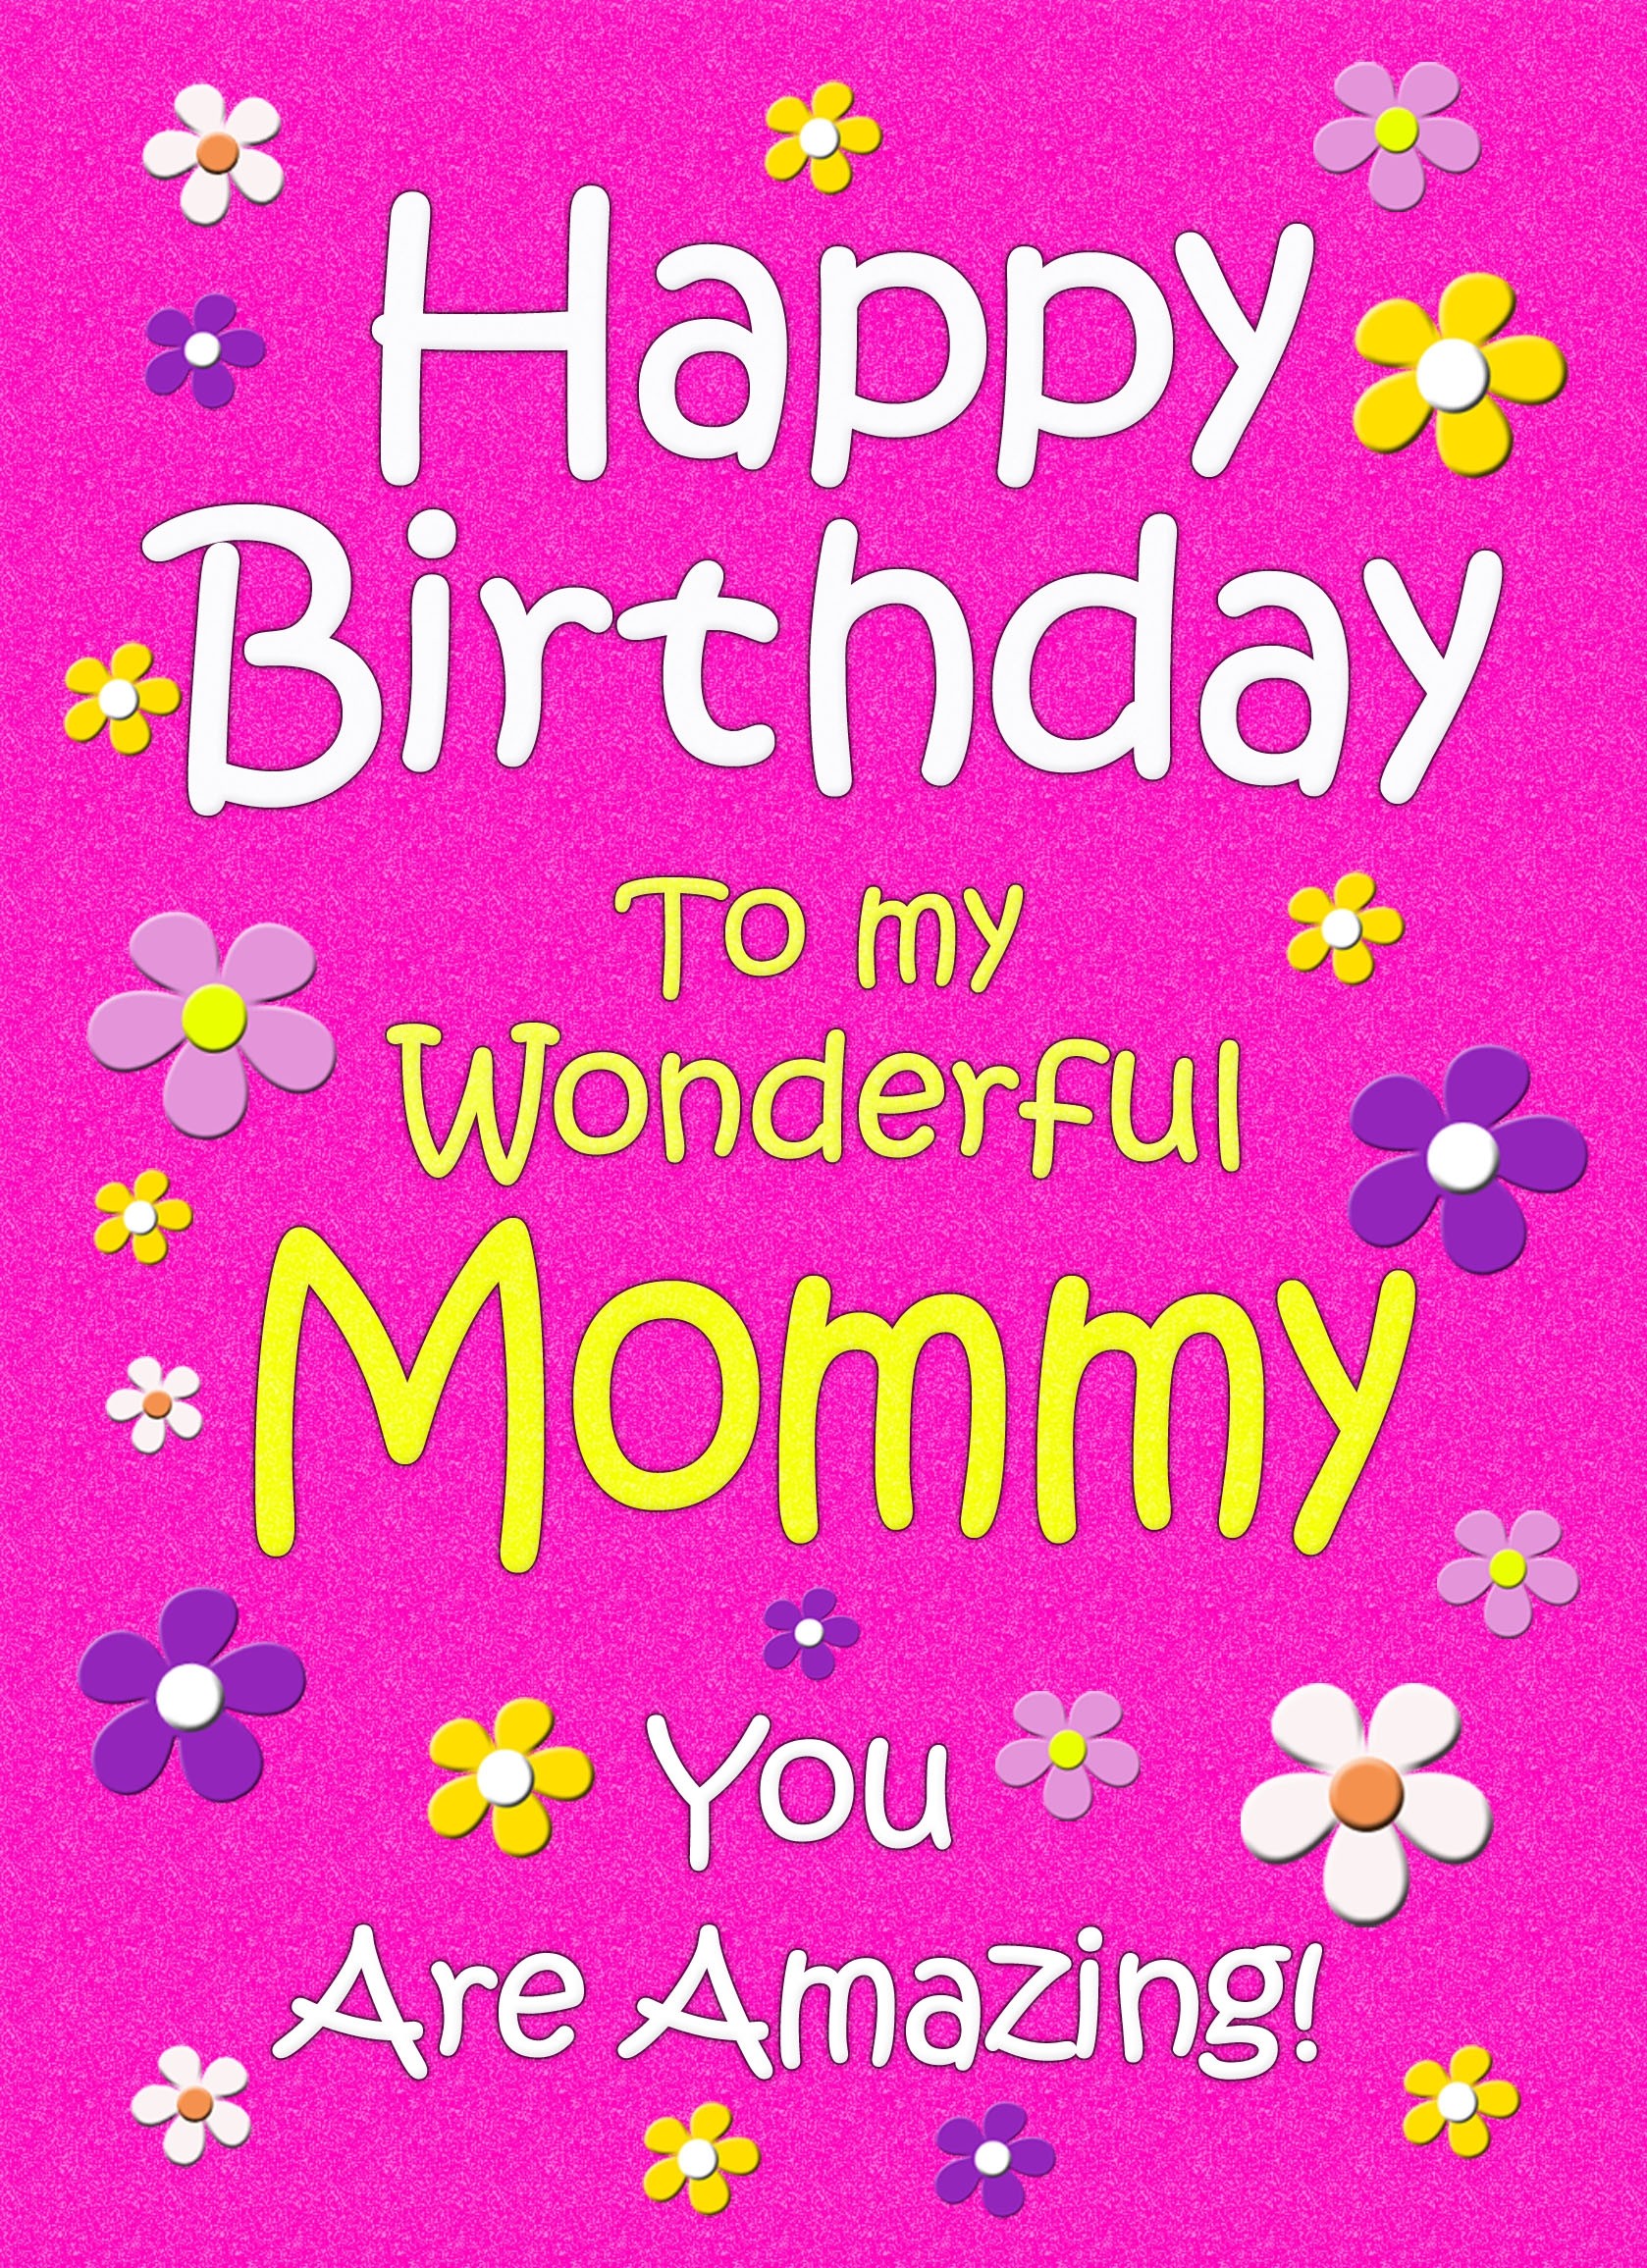 Mommy Birthday Card (Cerise)